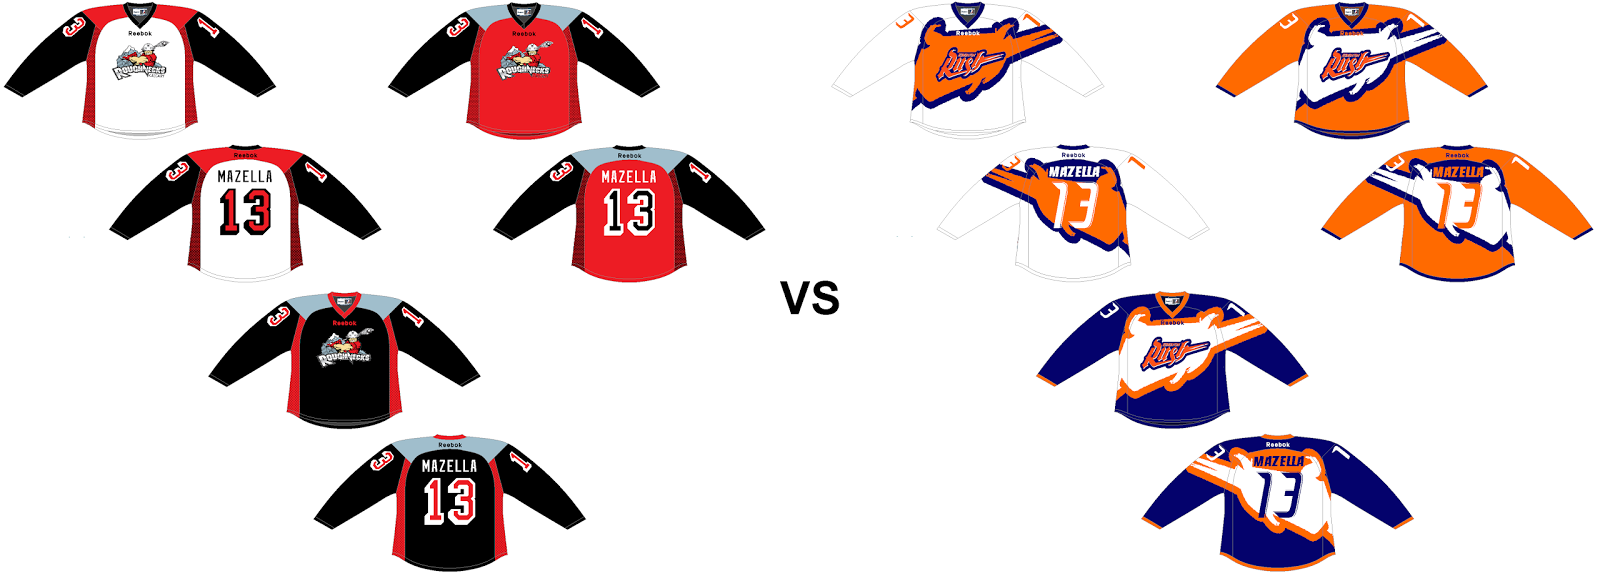 Brandon Wheat Kings Home Uniform - Western Hockey League (WHL) - Chris  Creamer's Sports Logos Page 